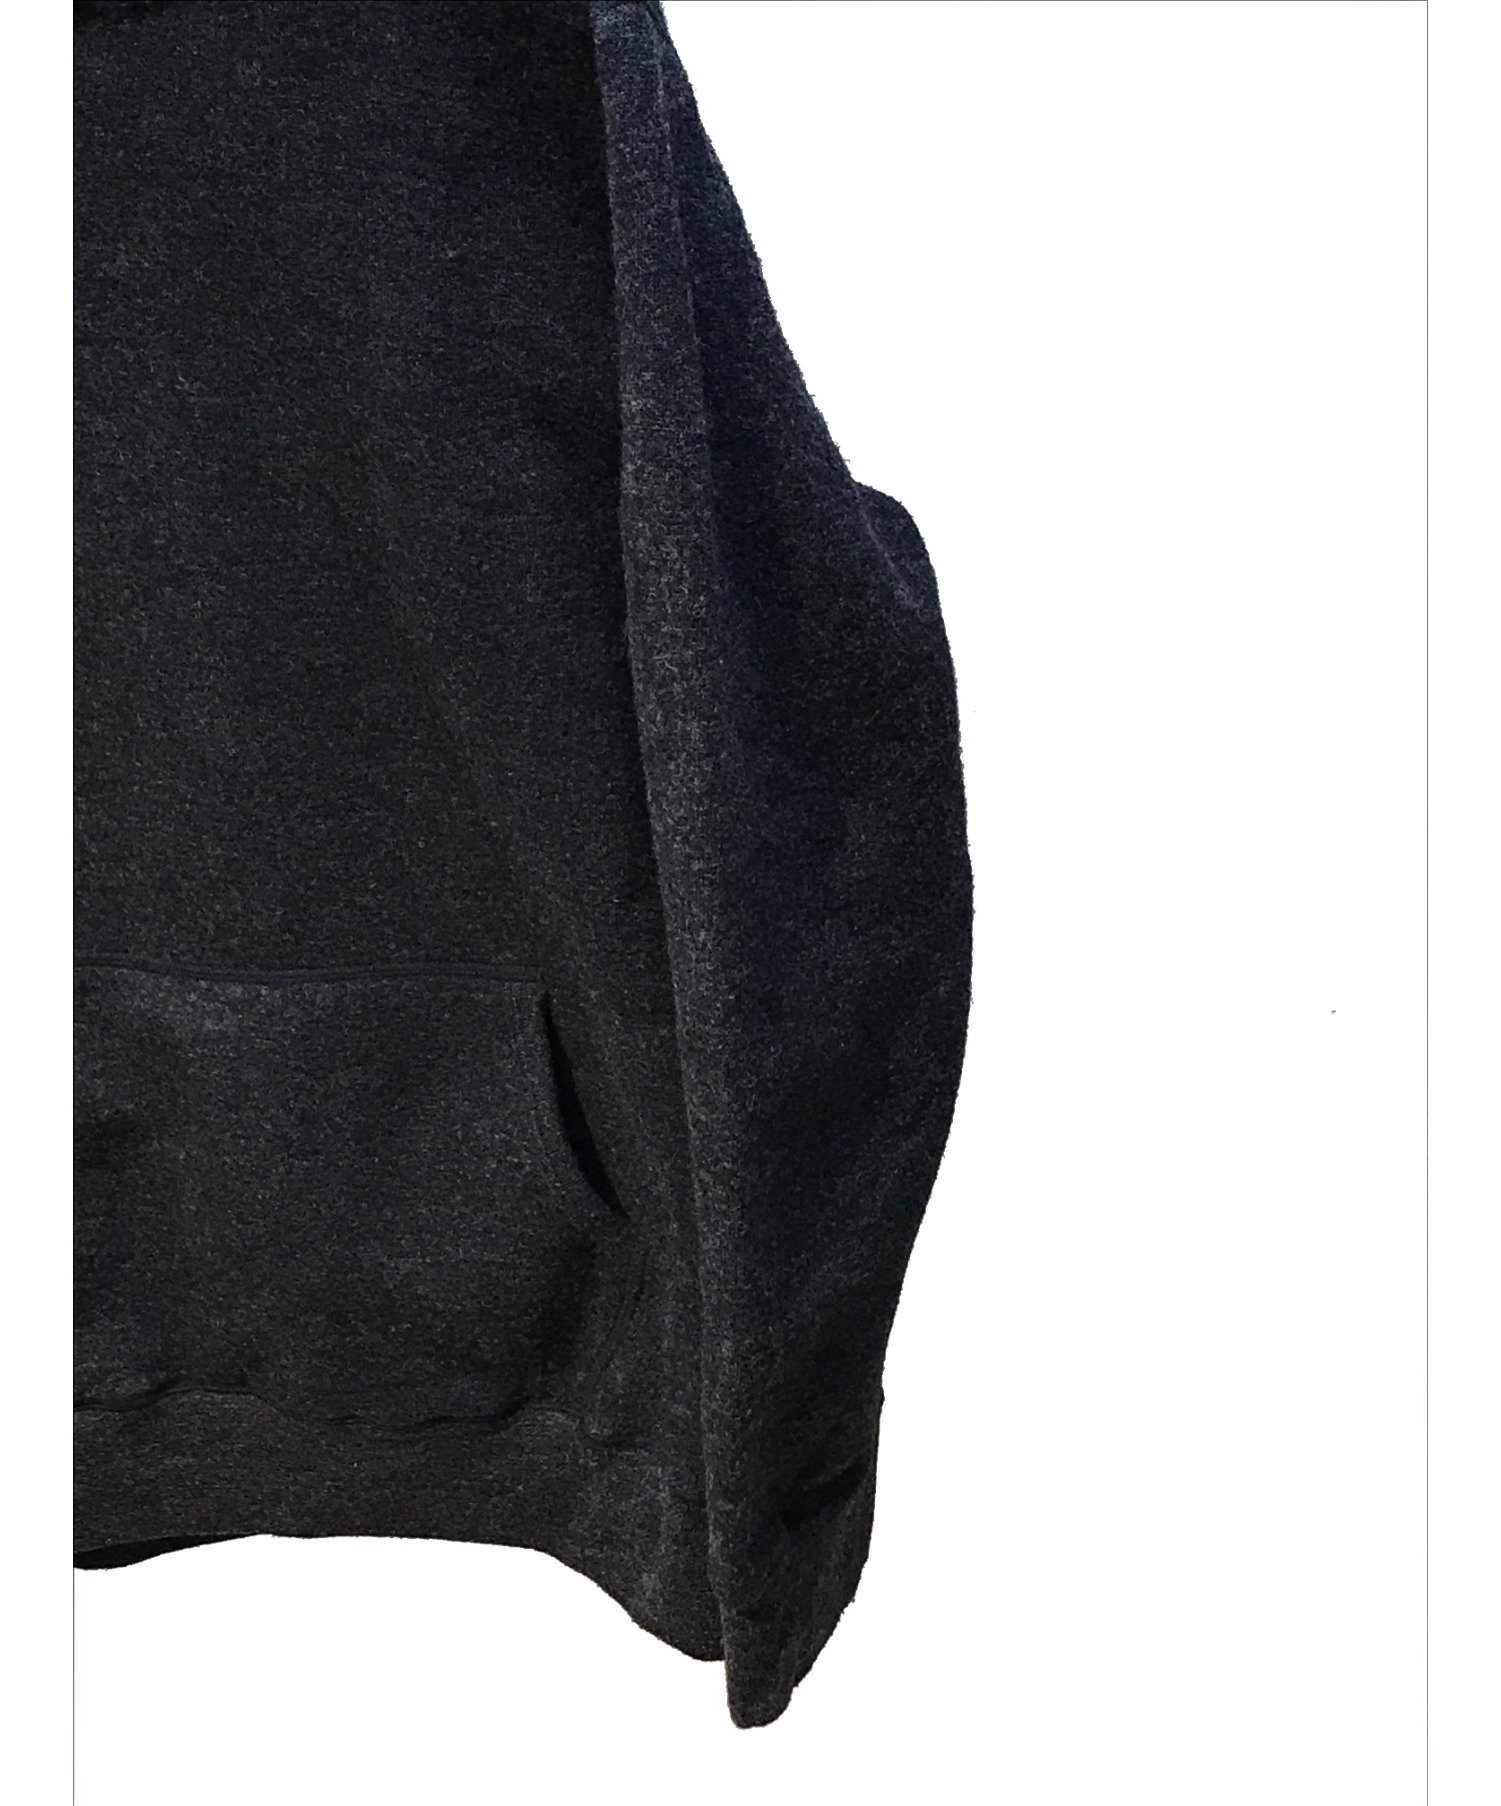 yetina (イエティナ) pullover hoodie（プルオーバーパーカー） ネイビー サイズ:XS 秋冬物